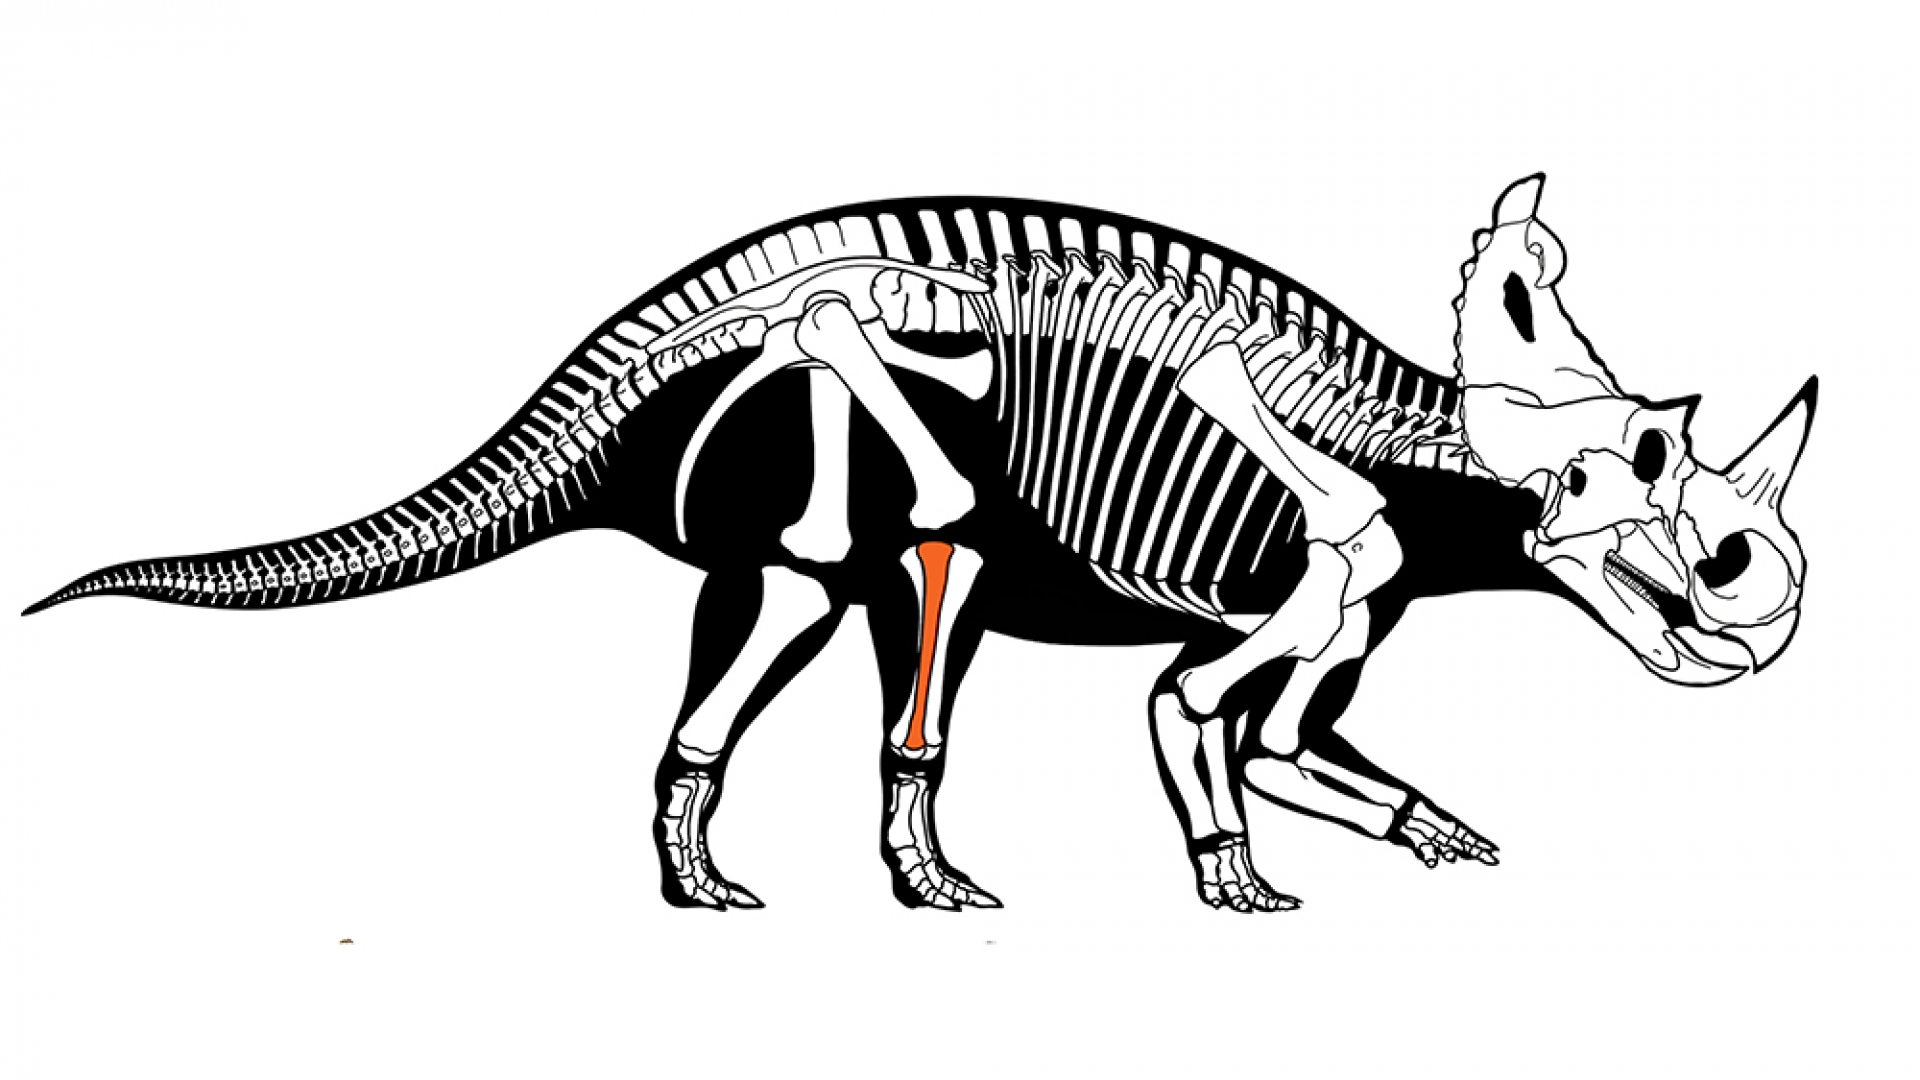 Illustration of dinosaur skeleton.